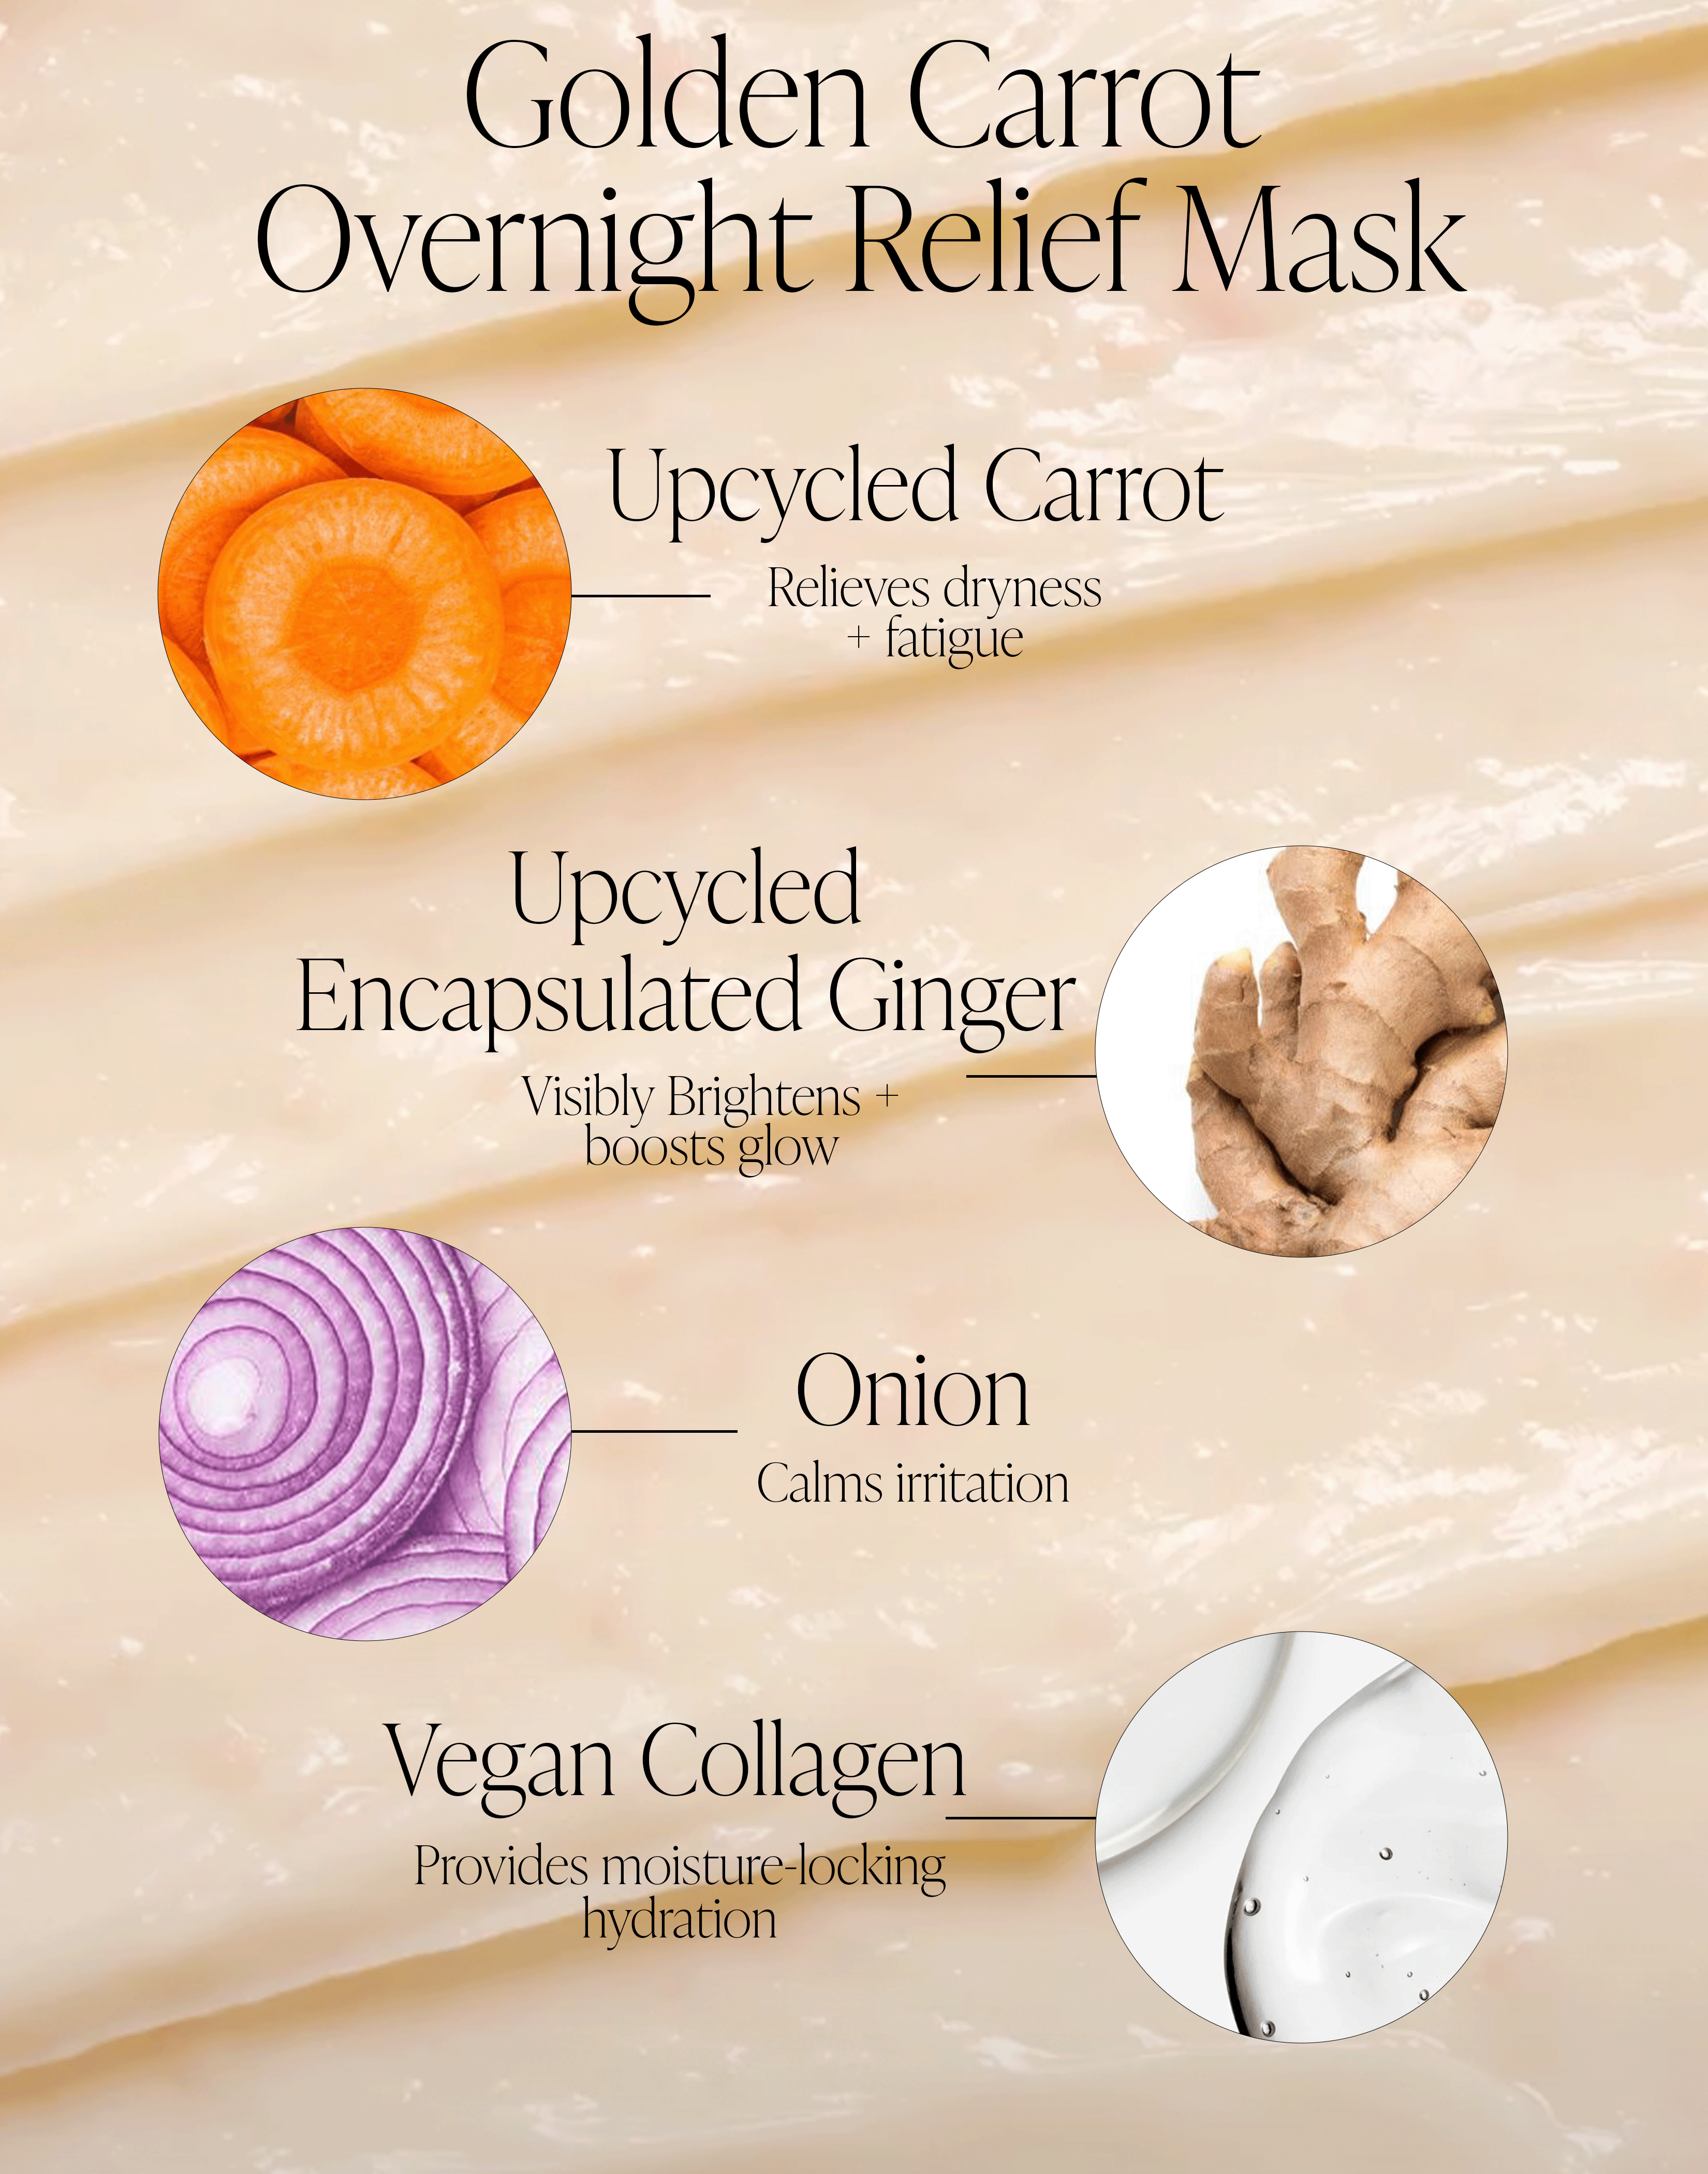 Golden Carrot Overnight Relief Mask